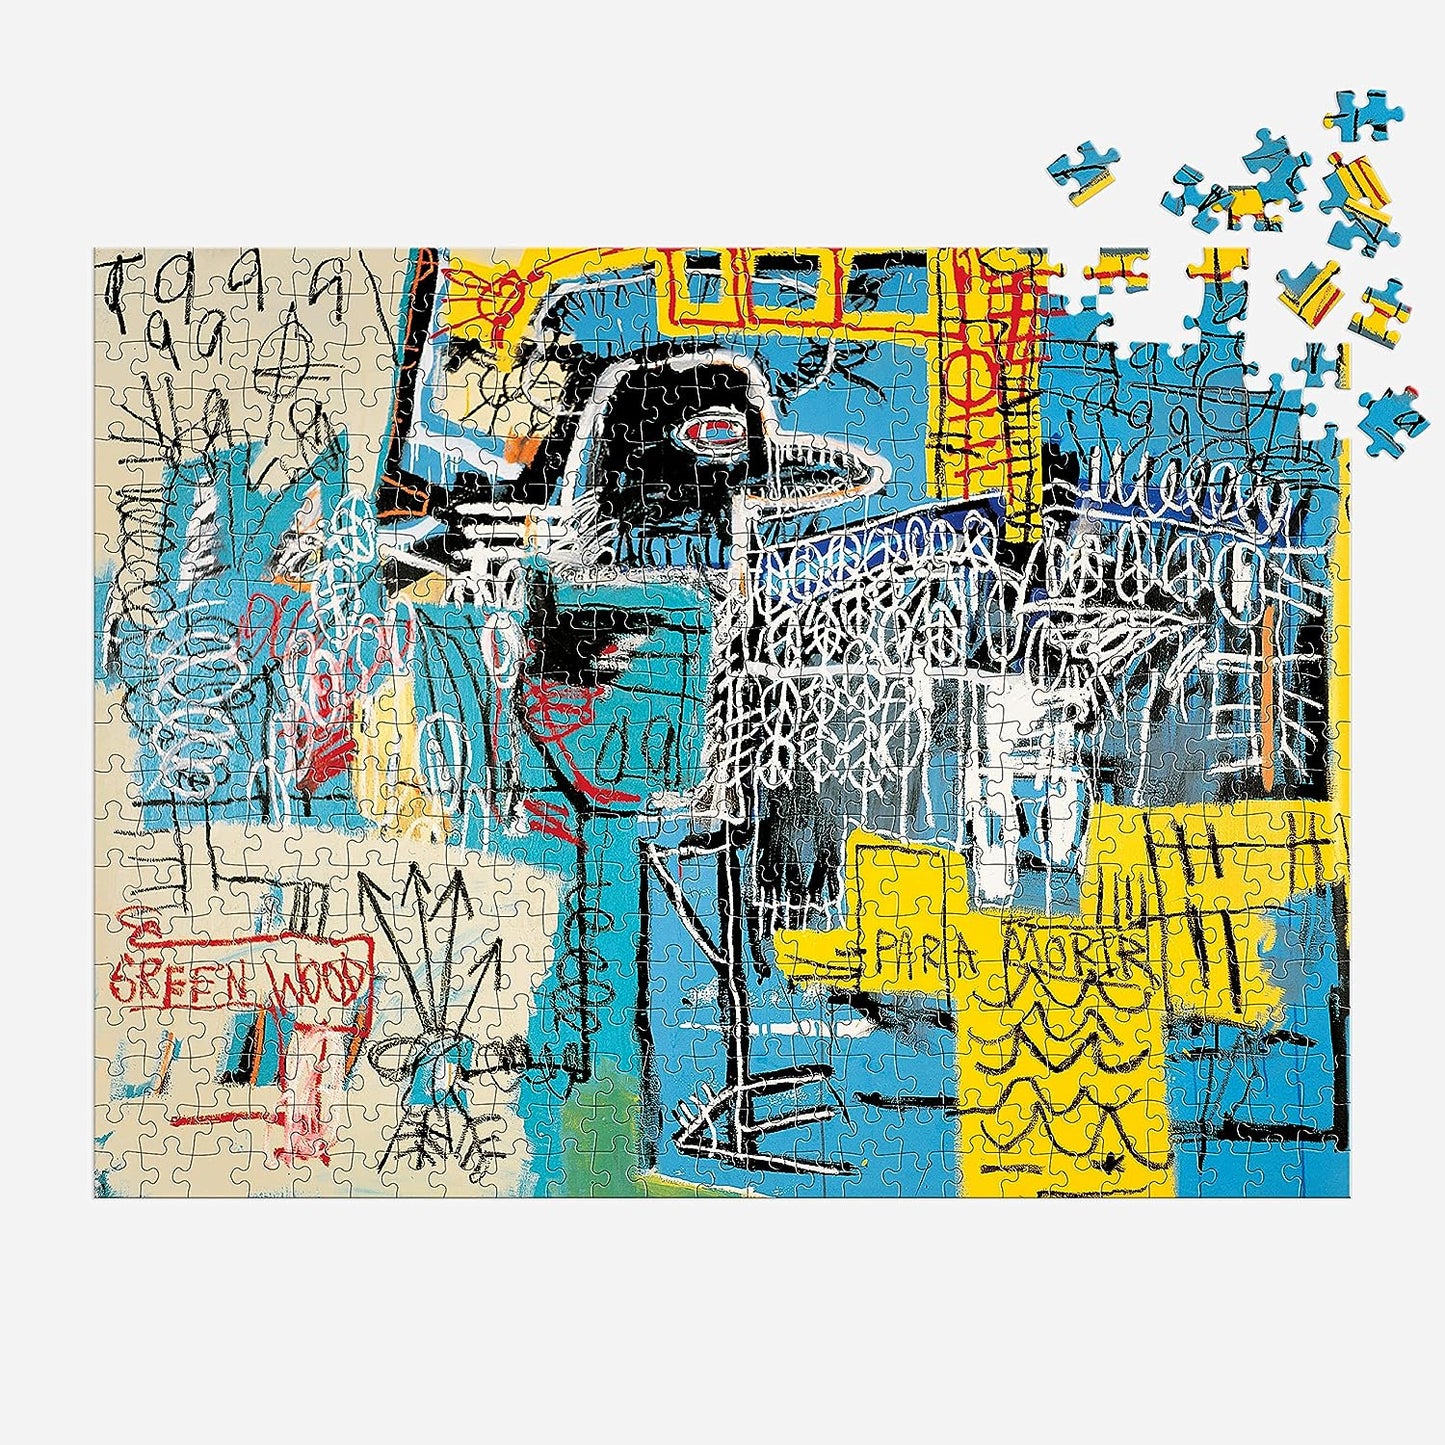 Basquiat Bird on Money Puzzle